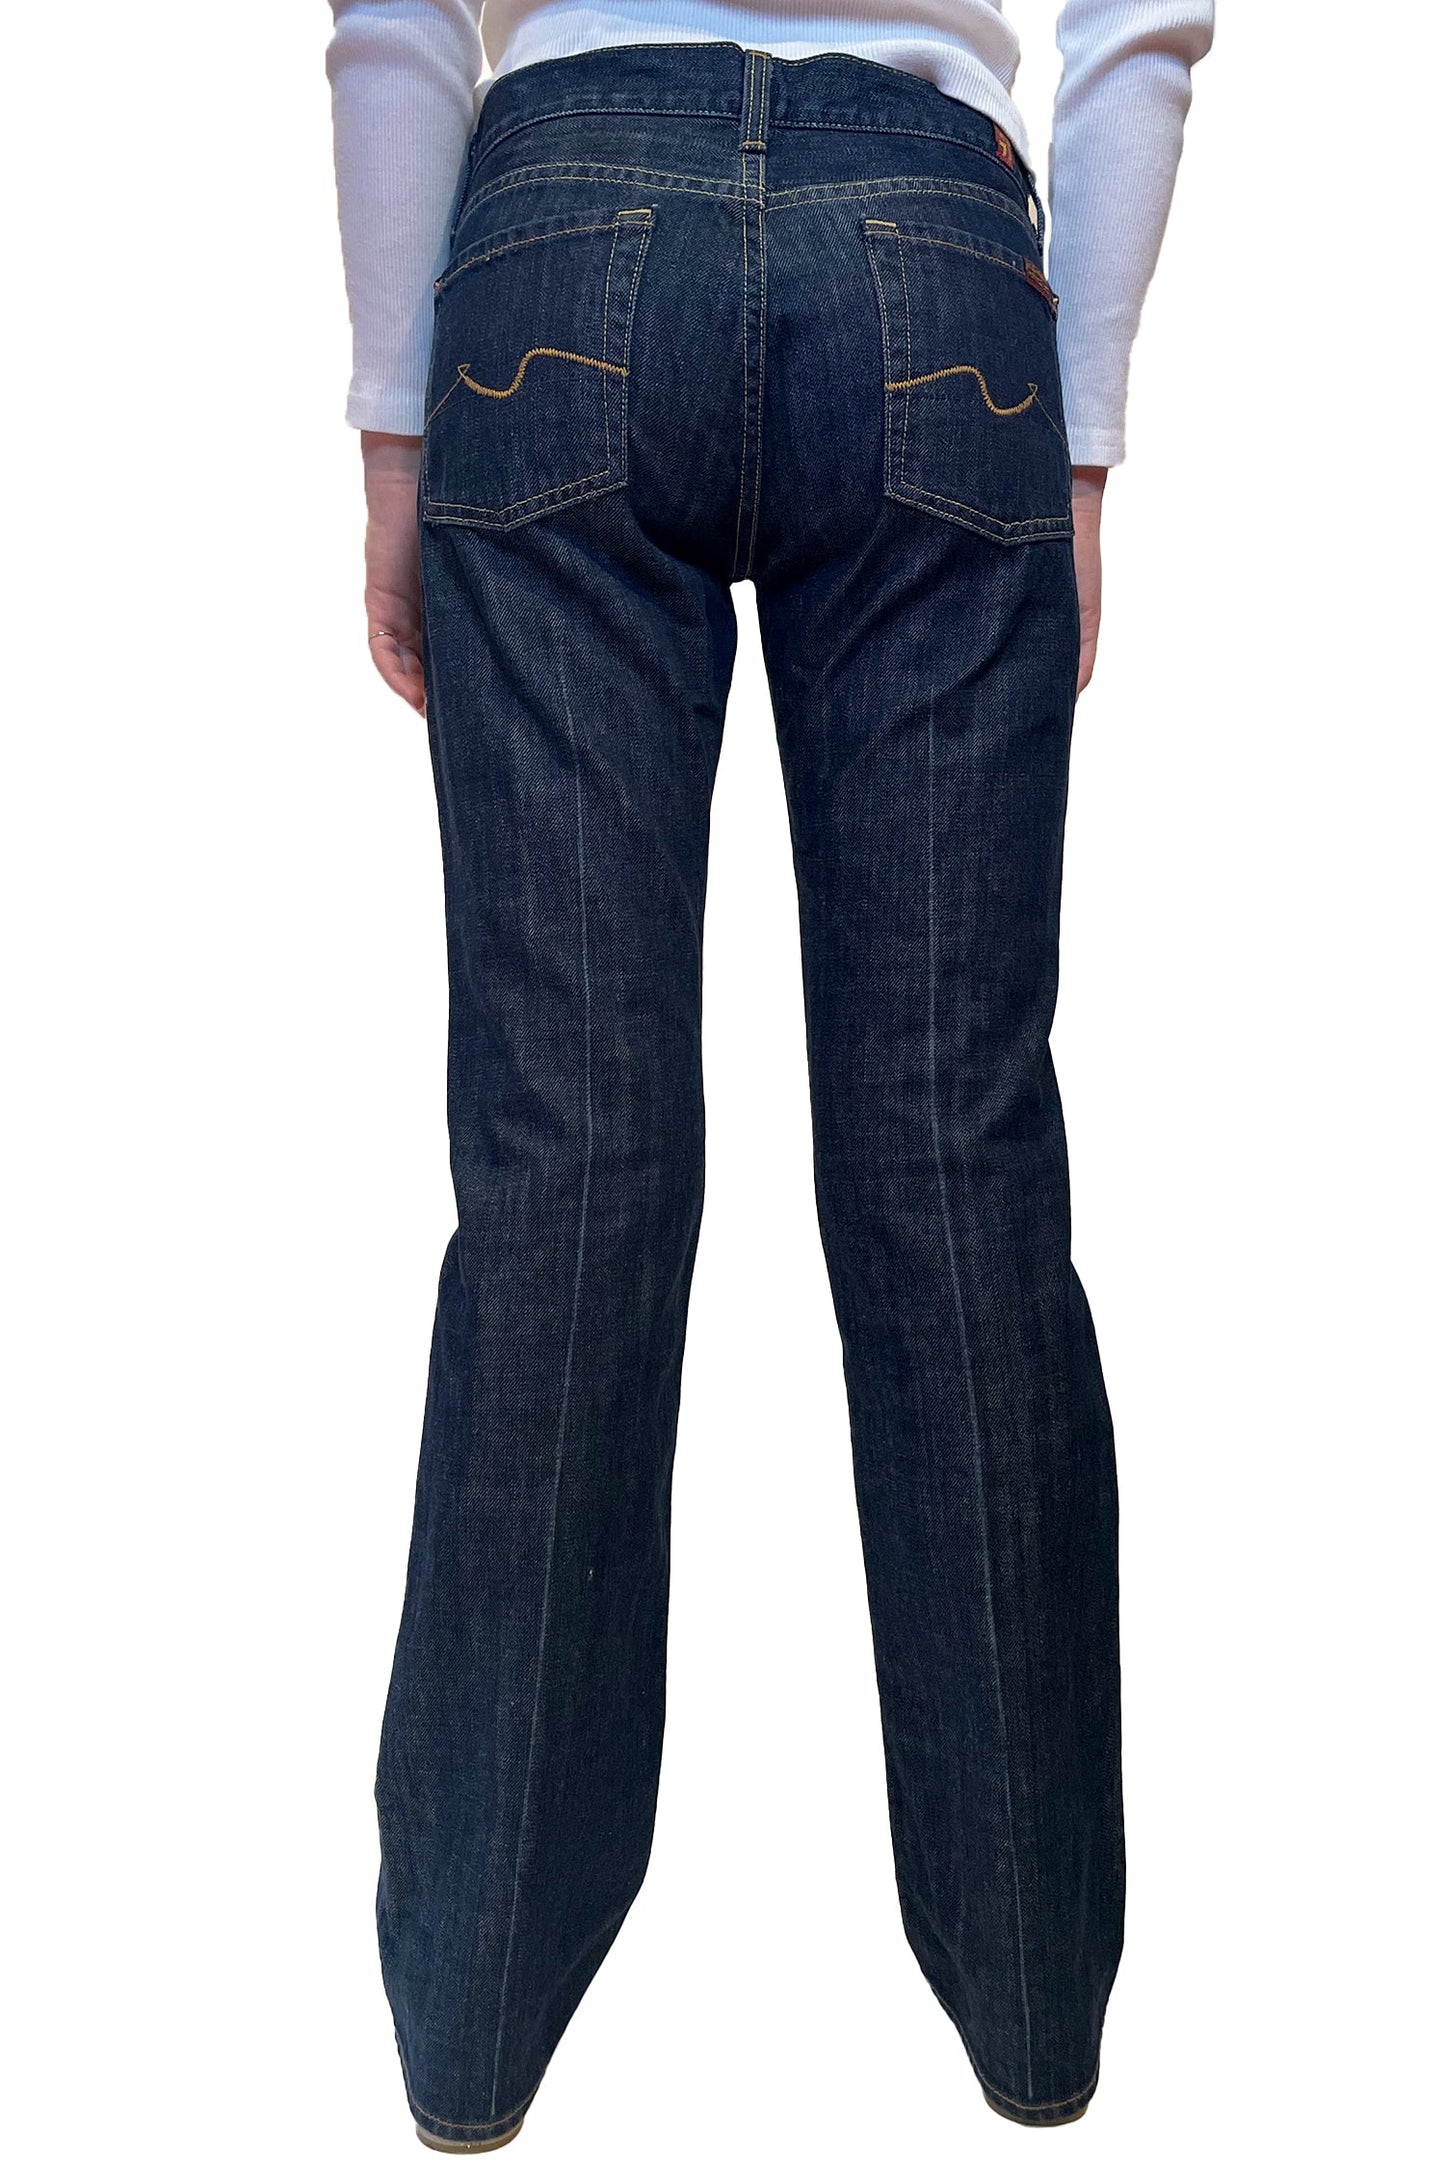 Vintage Seven for All Mankind Jeans